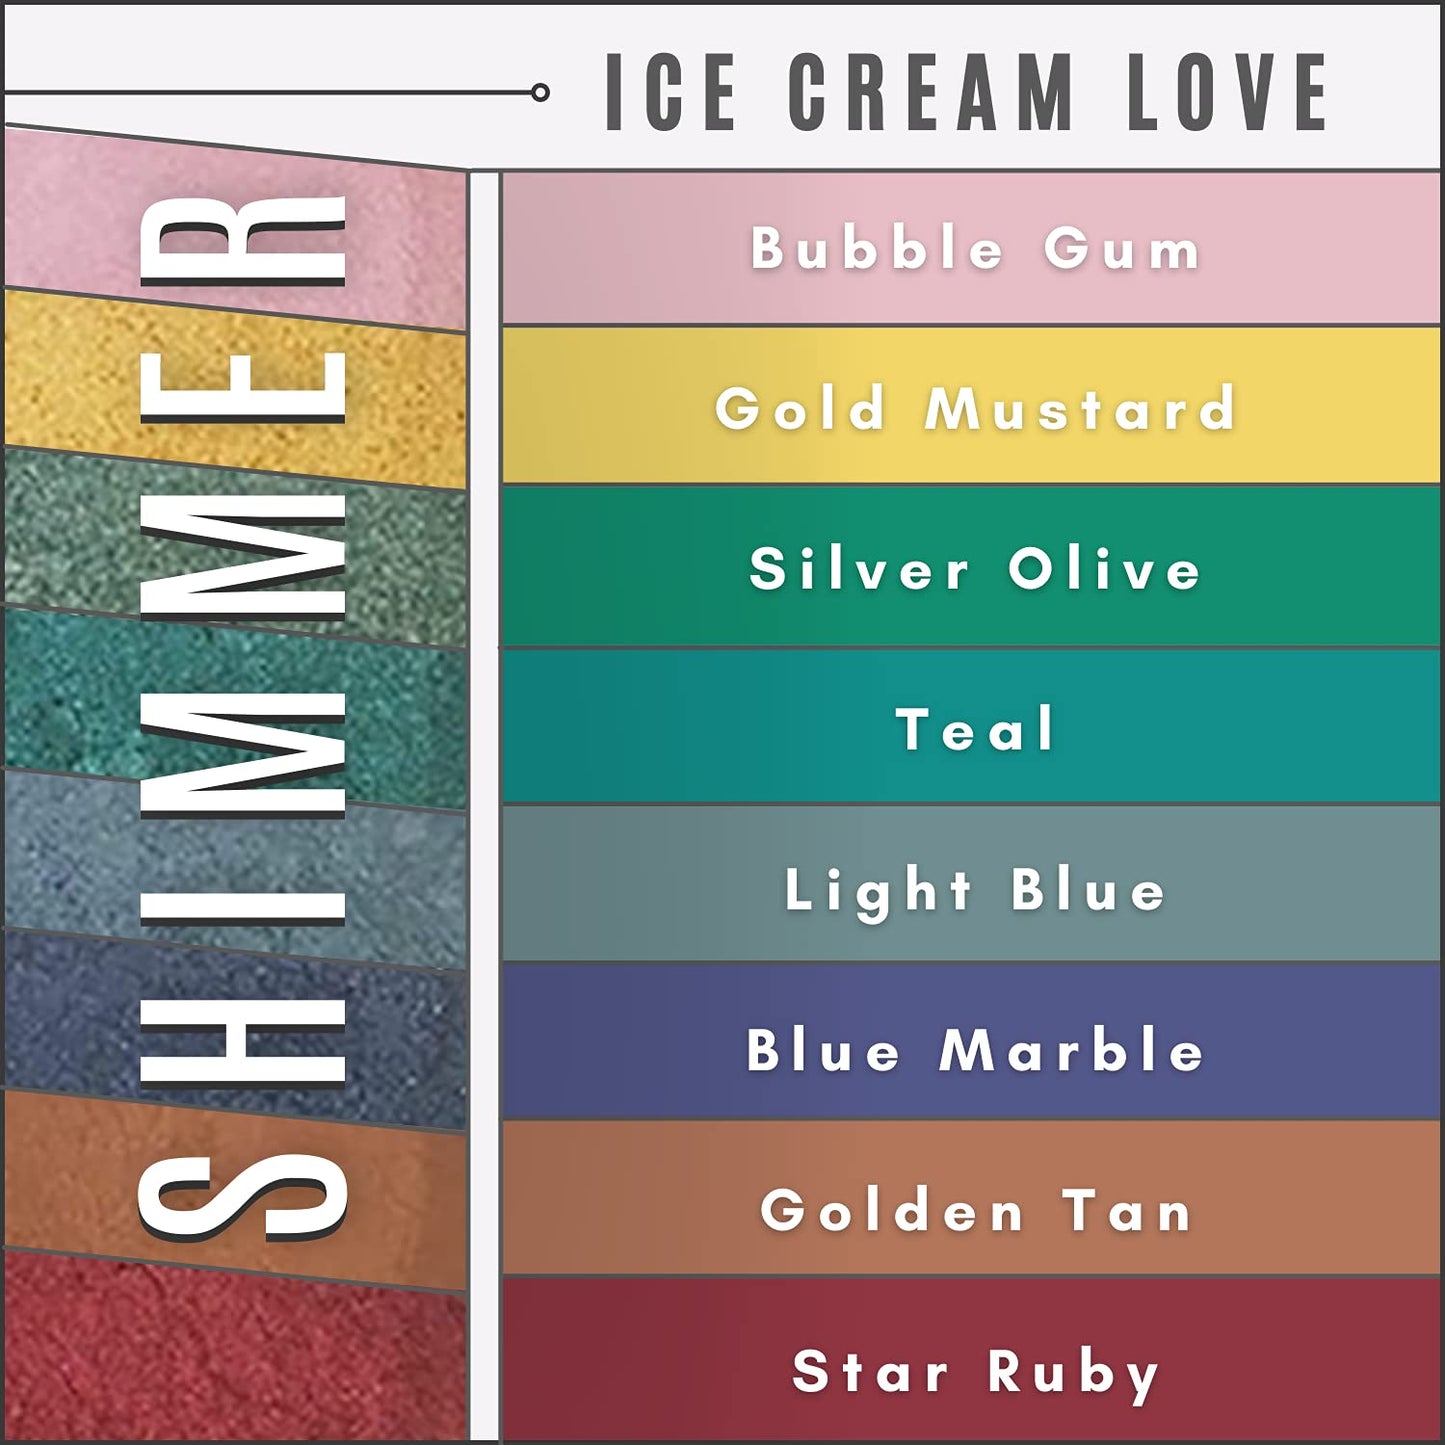 Ice Cream love ♥